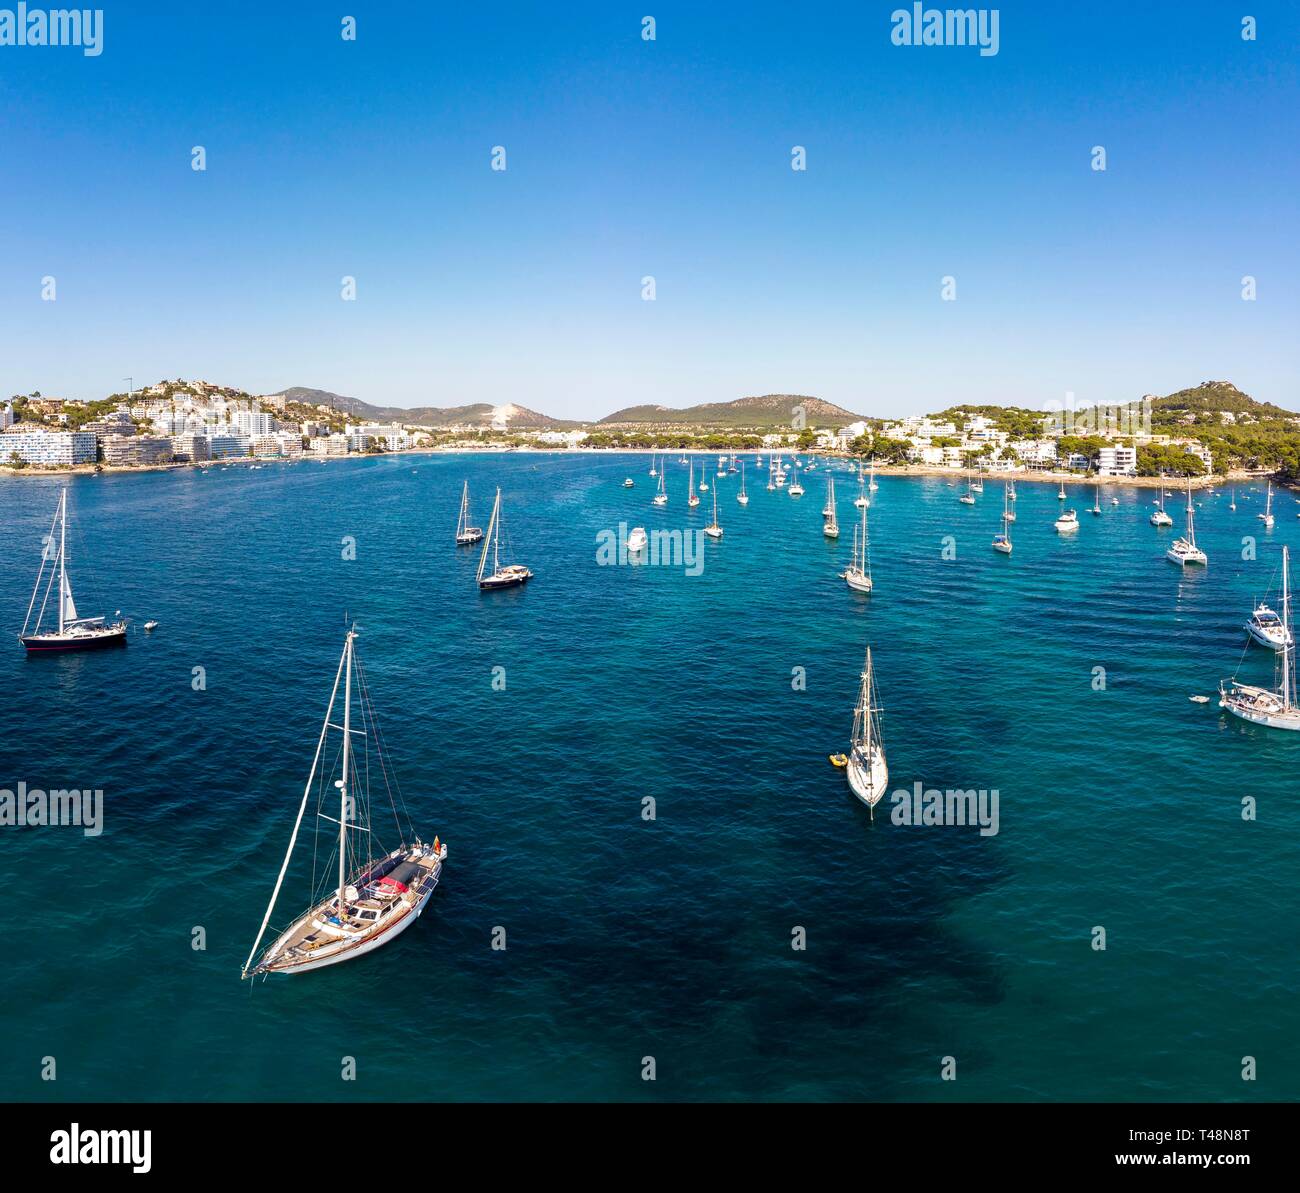 Aerial photo, view of the bay of Santa Ponca with sailing yachts, Majorca, Balearic Islands, Spain Stock Photo